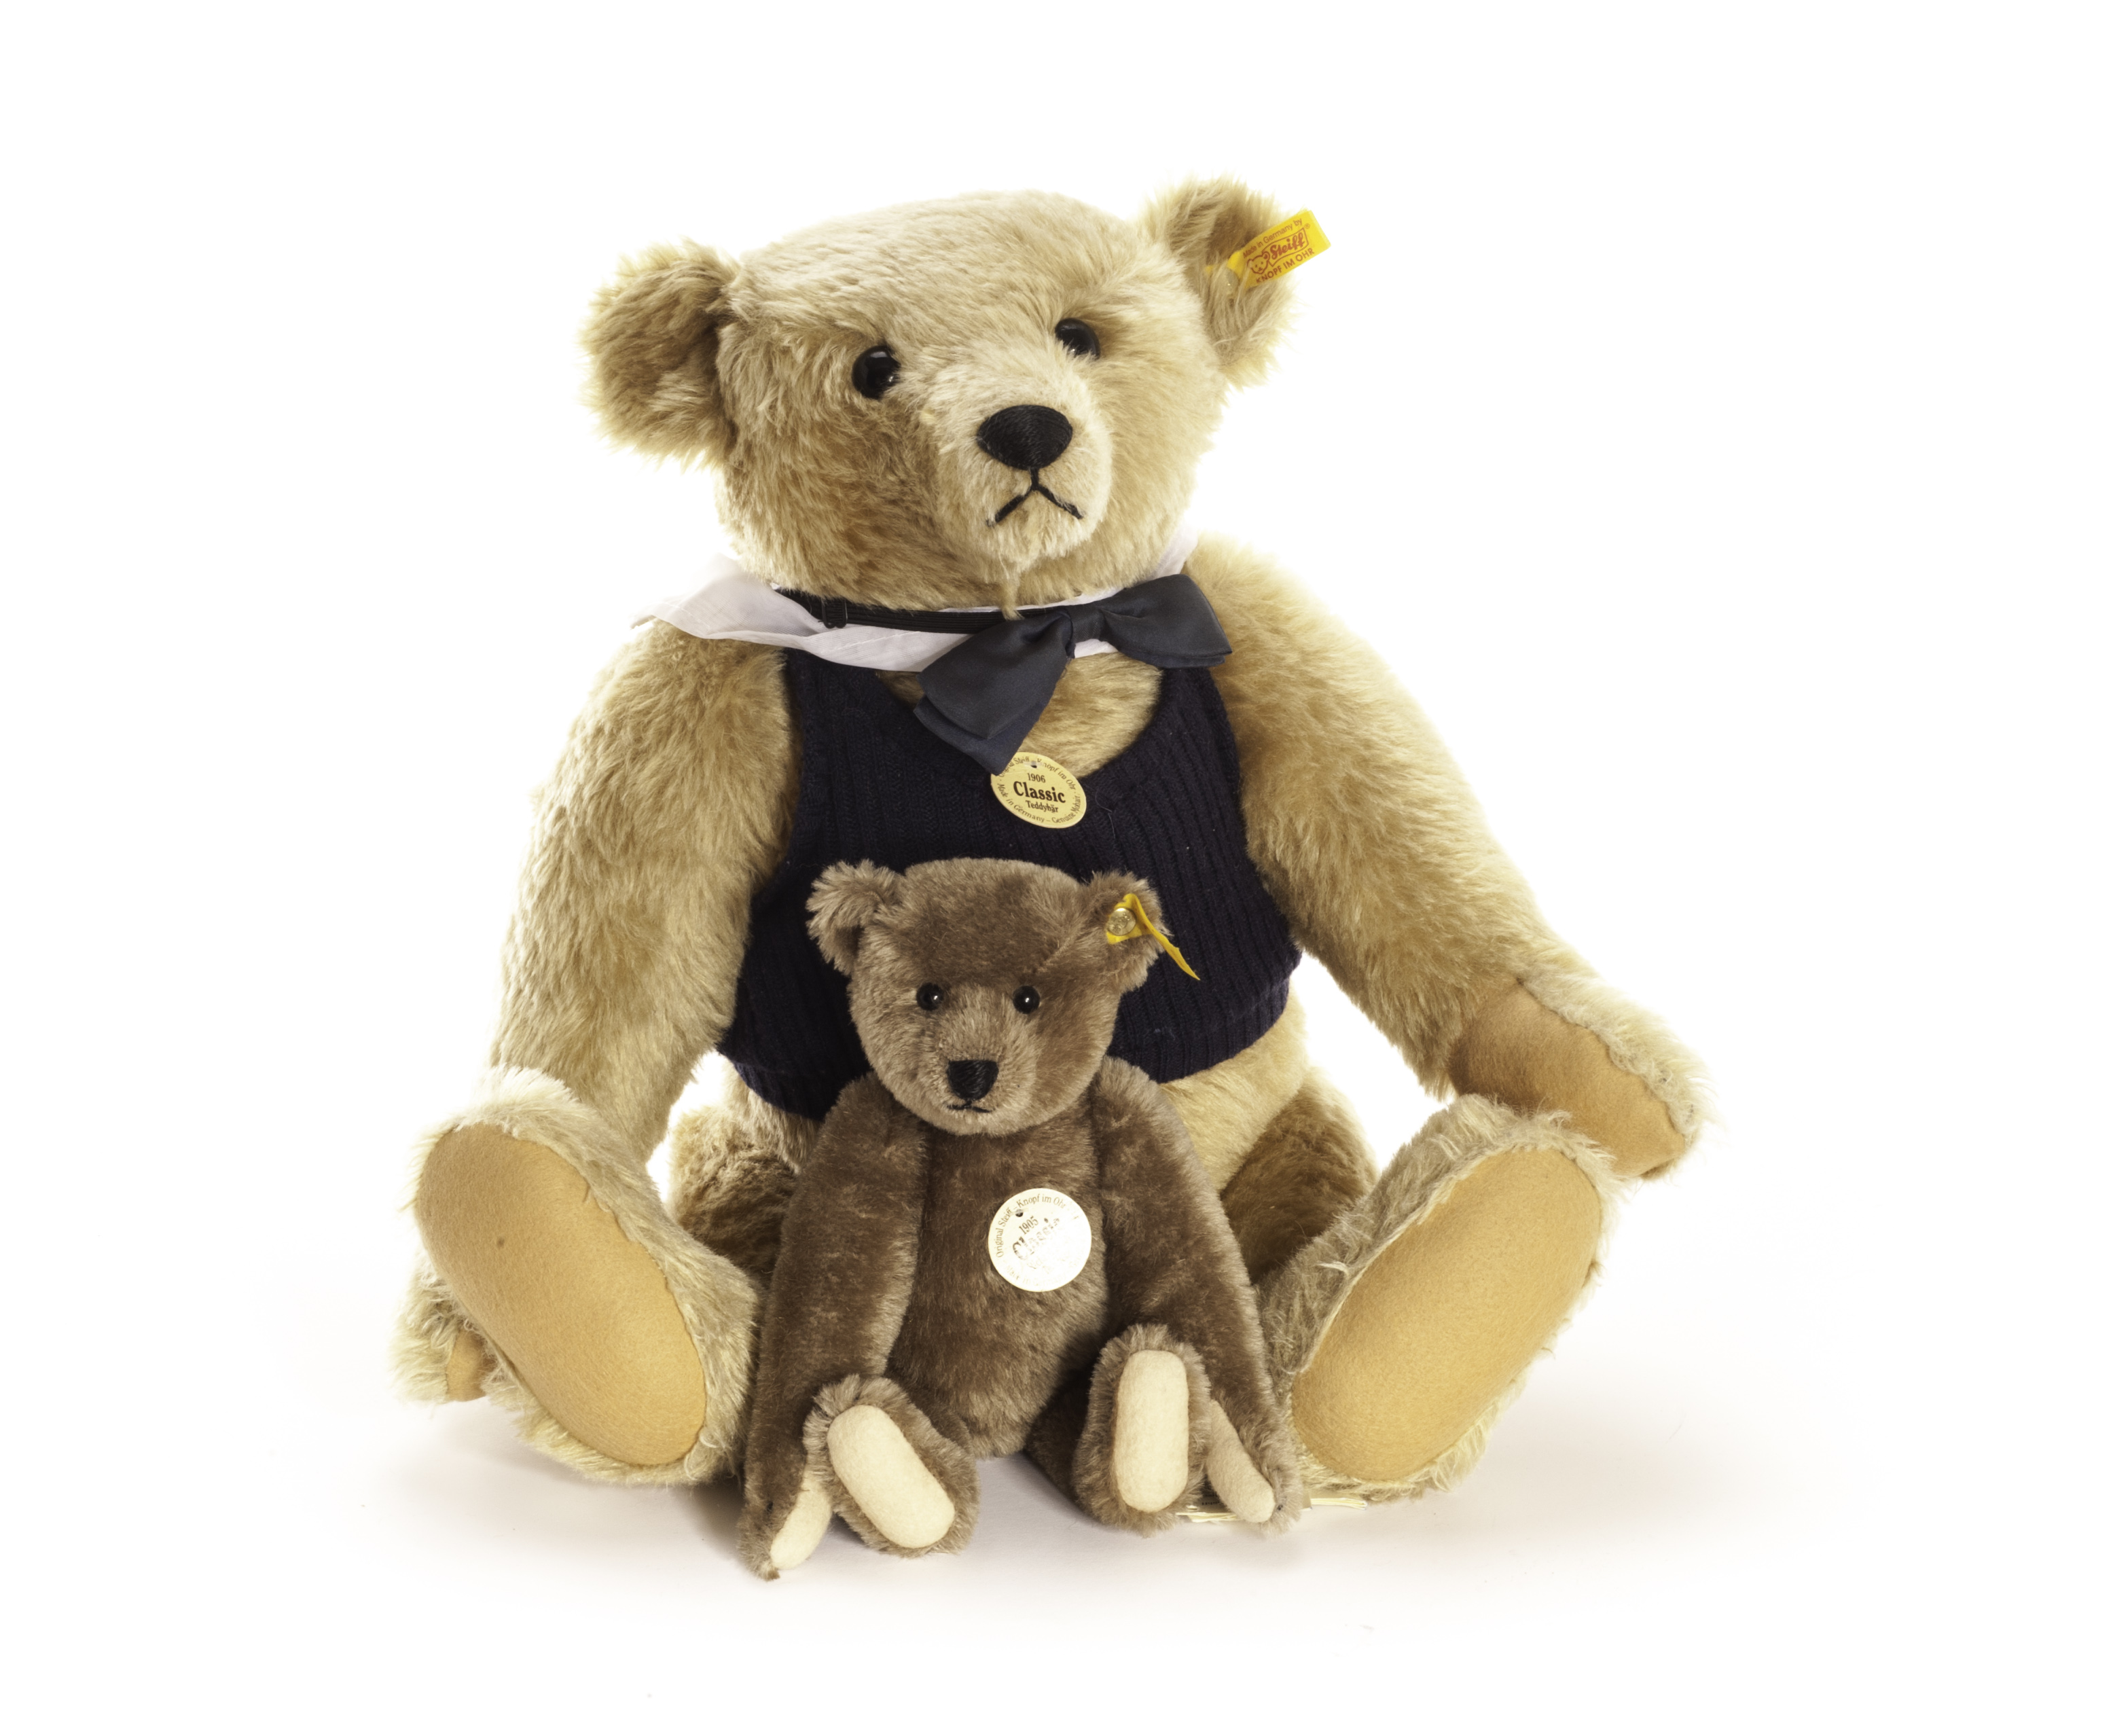 Steiff Classics 1905 Richard Steiff and 1906 Teddy Bears, both with chest tags and yellow ear